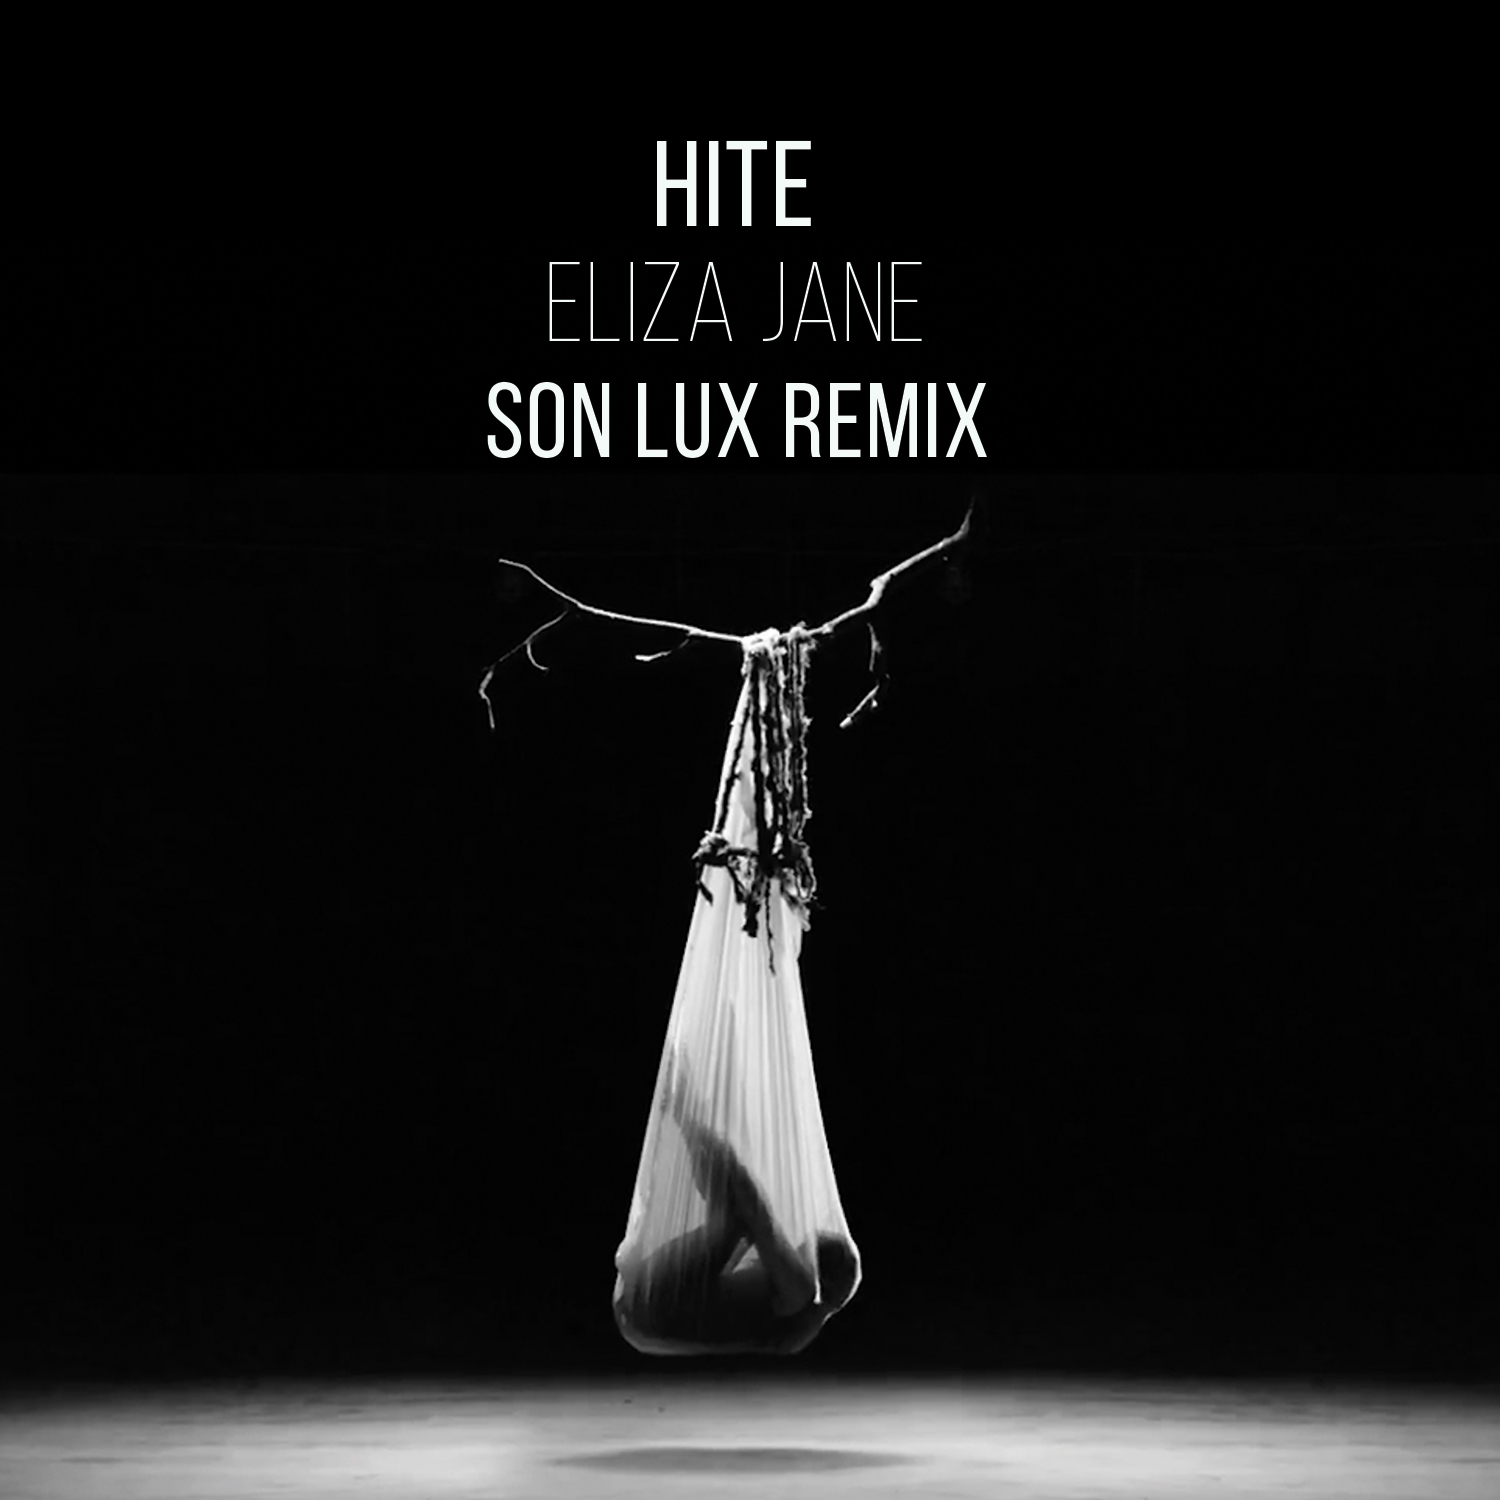 BlackBook Media premieres beautiful new Son Lux remix of Hite’s track “Eliza Jane”